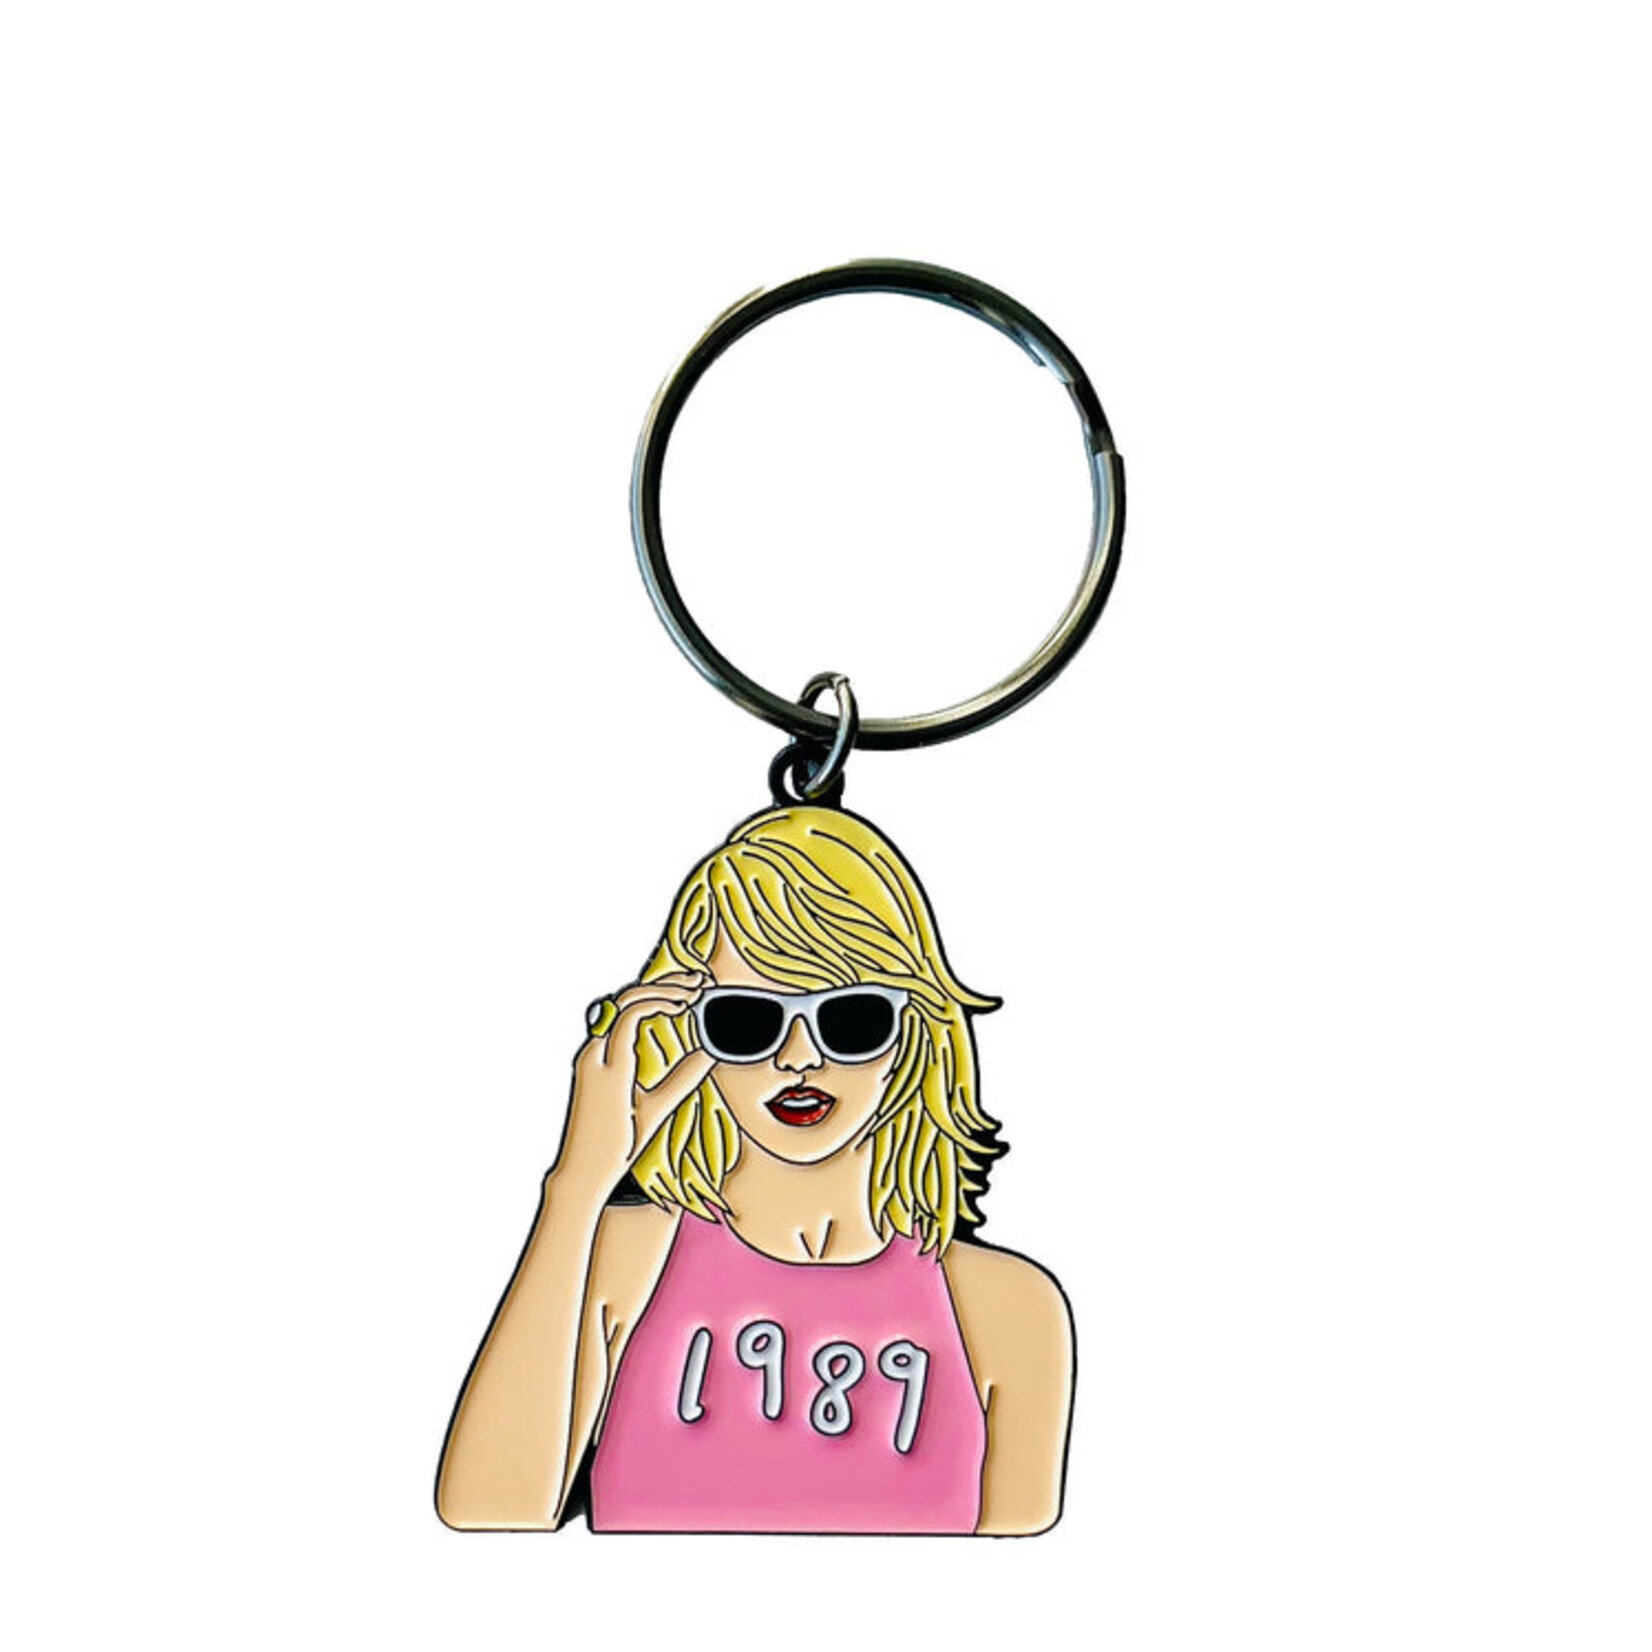 The Found Taylor Swift 1989 Enamel Keychain